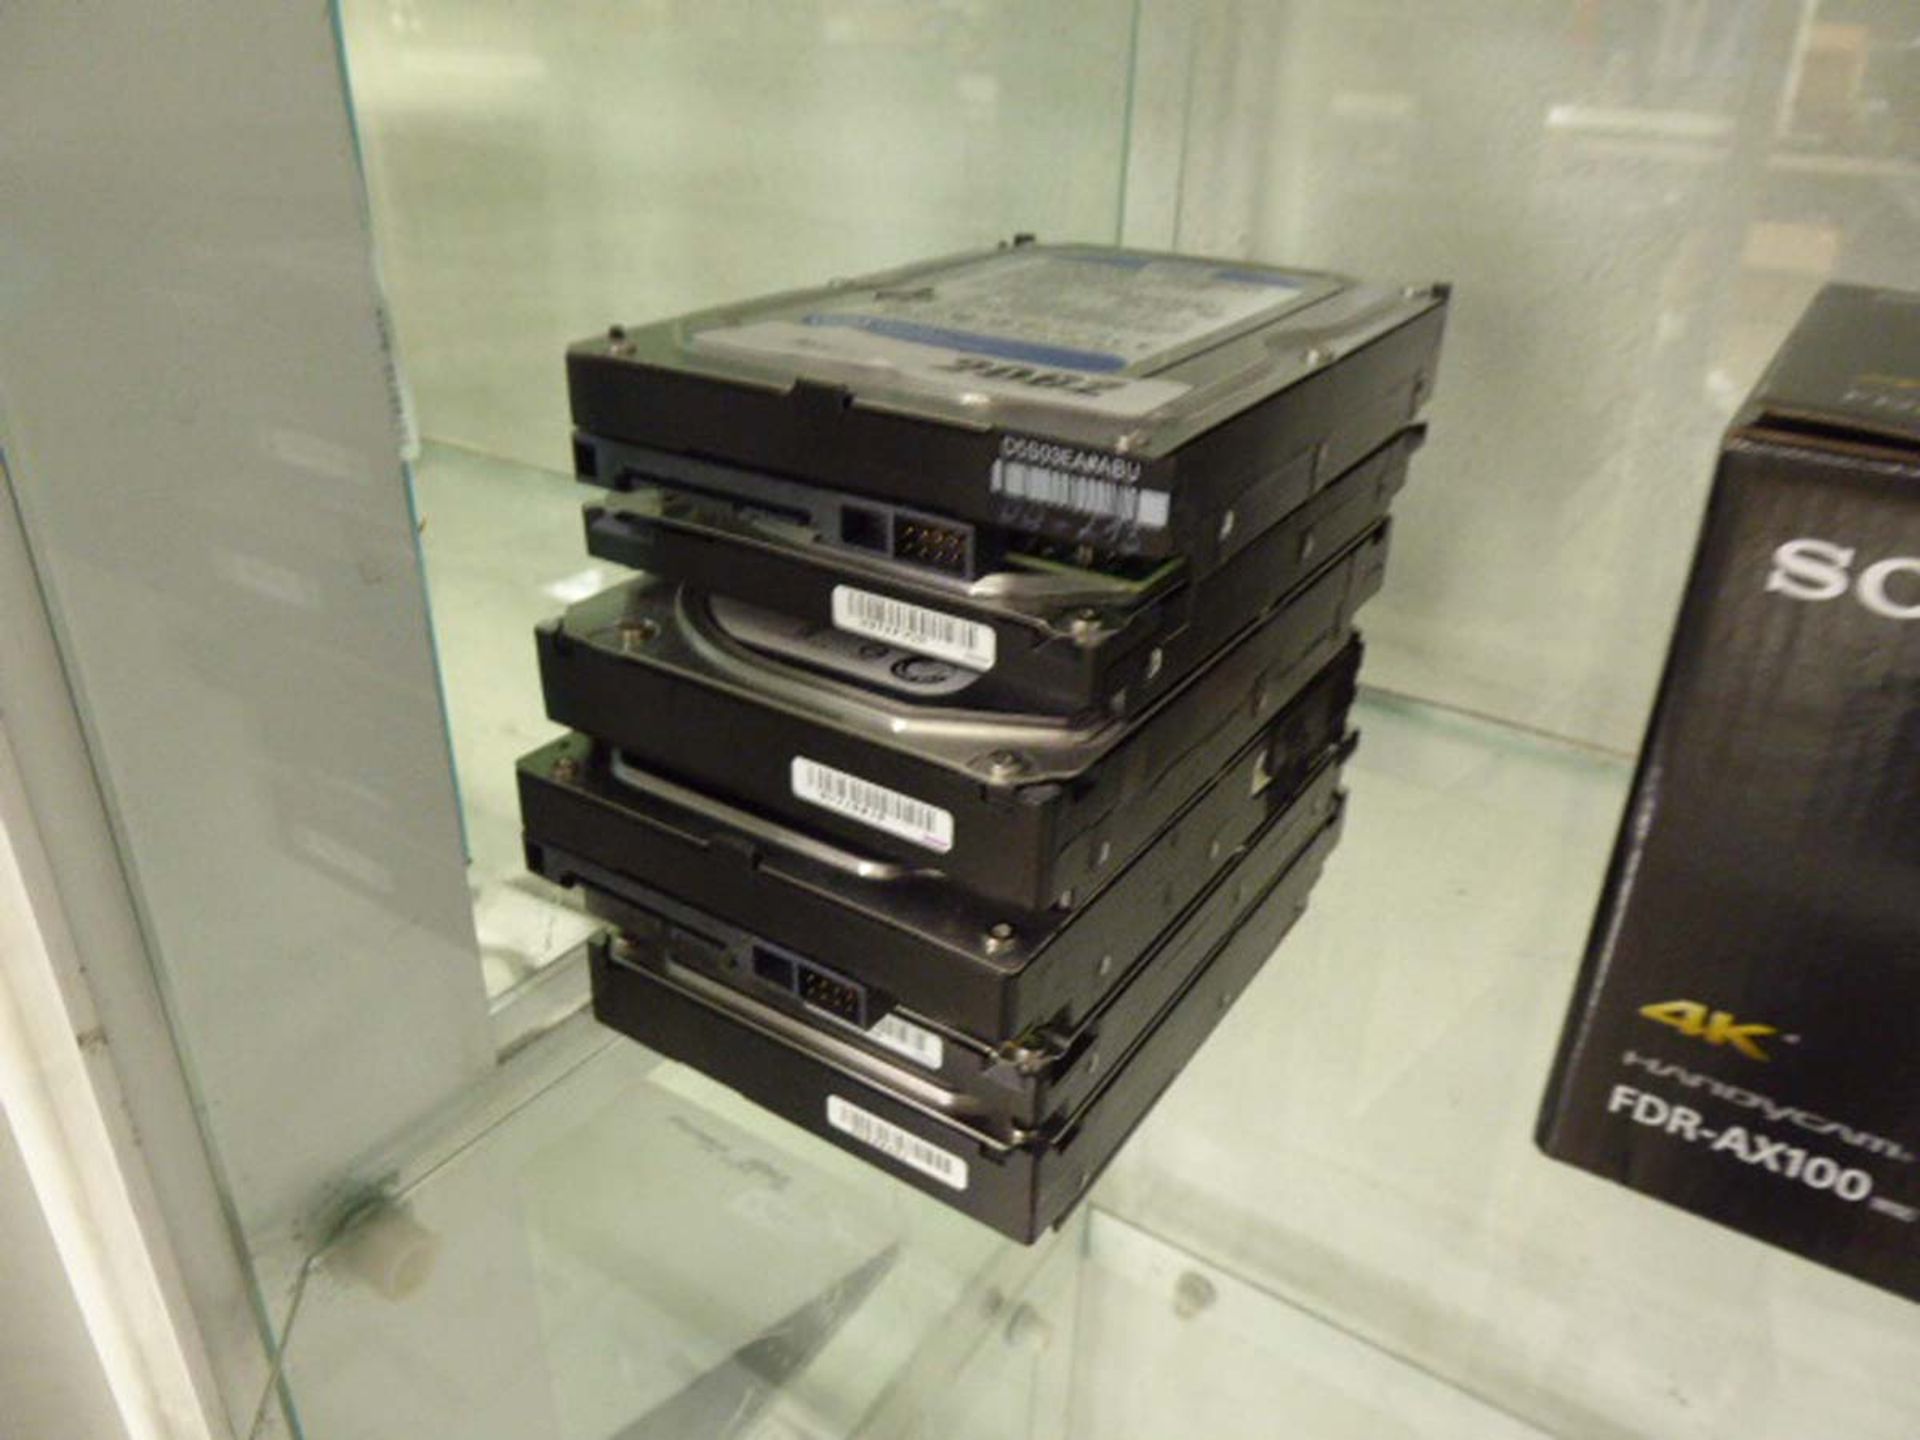 6 various sized hard drives